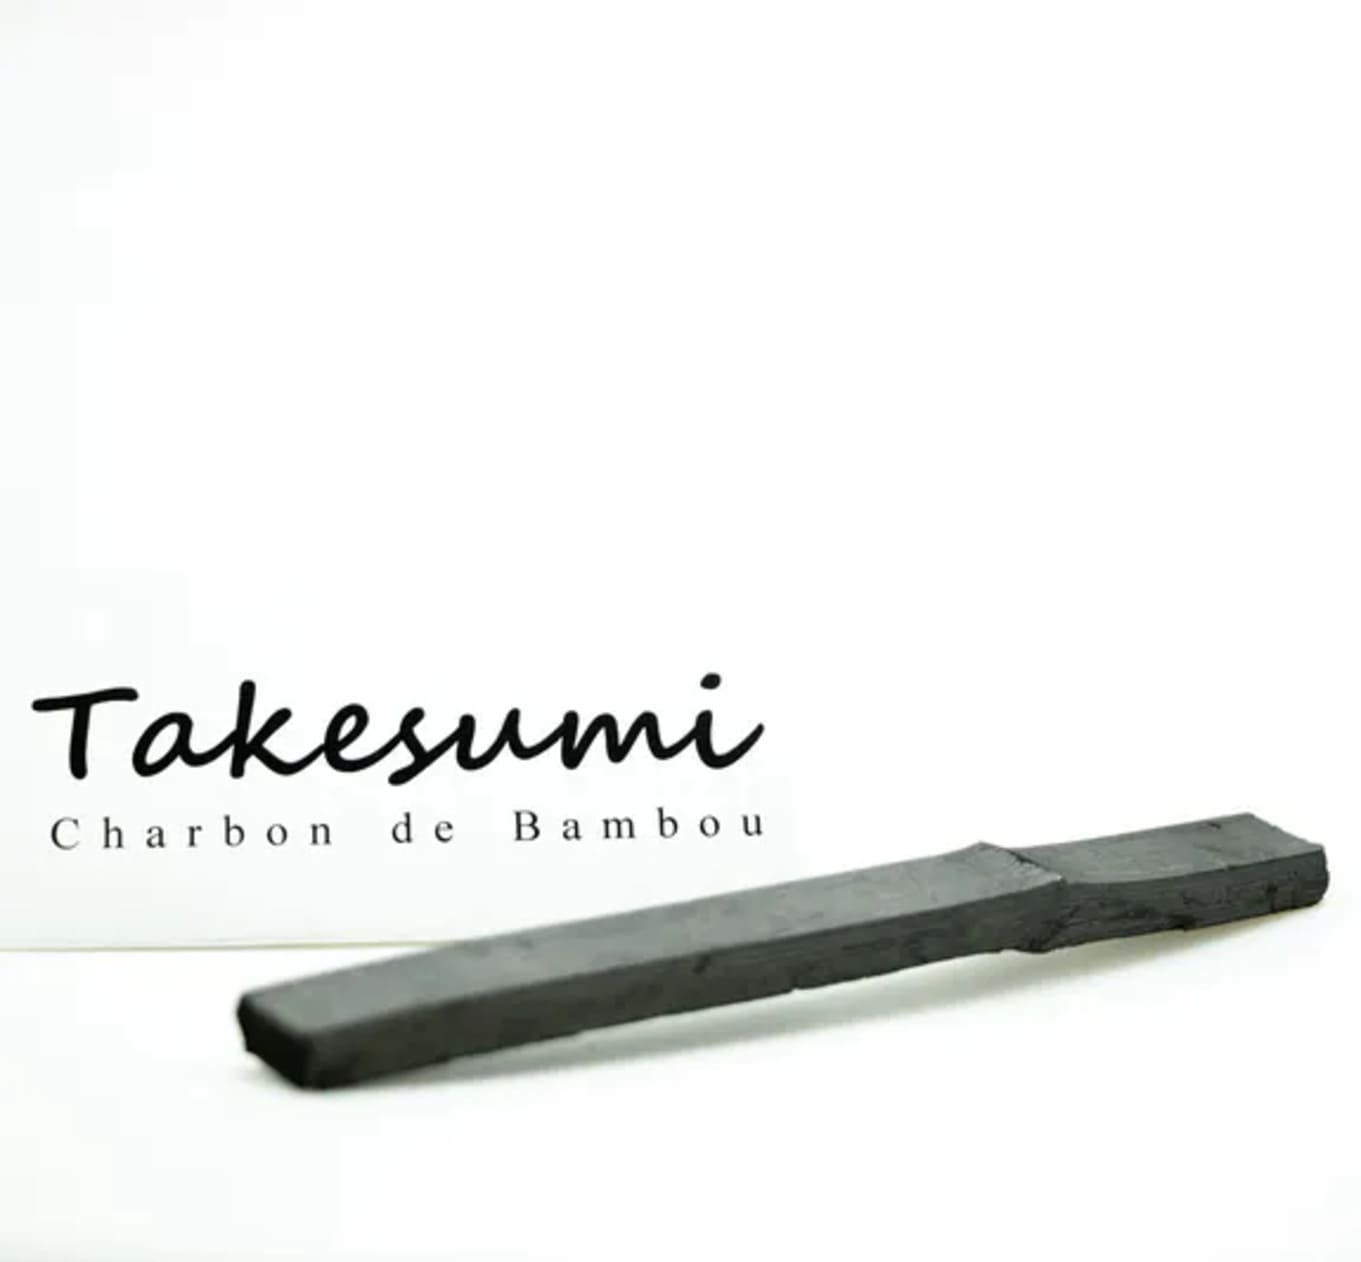 baton de charbon avec nom de la marque takesumi